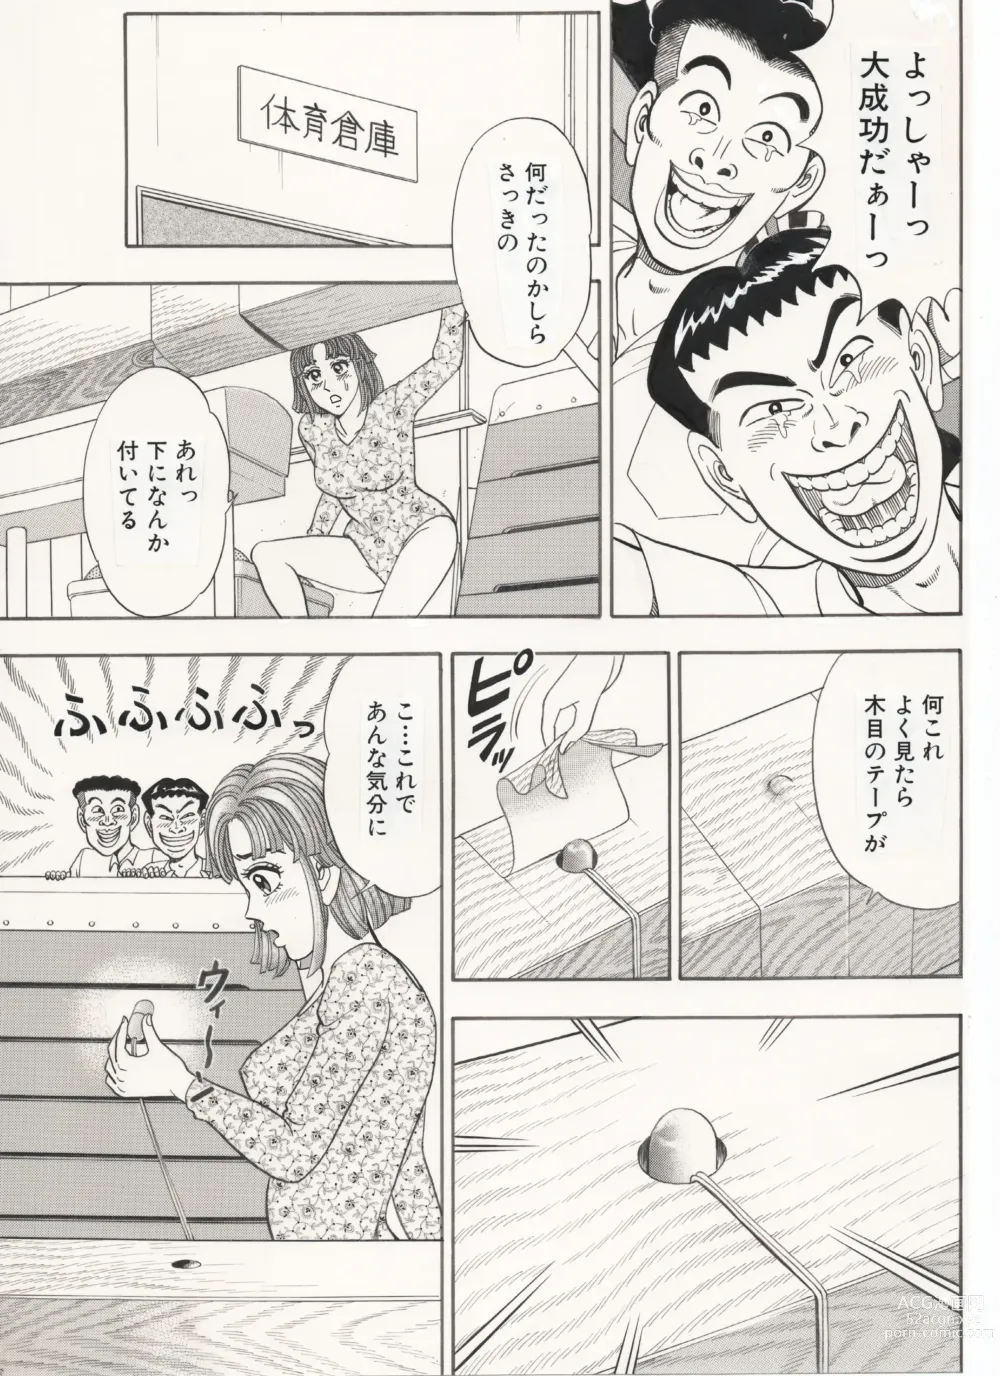 Page 13 of doujinshi Taisou Joshi… Midareru.